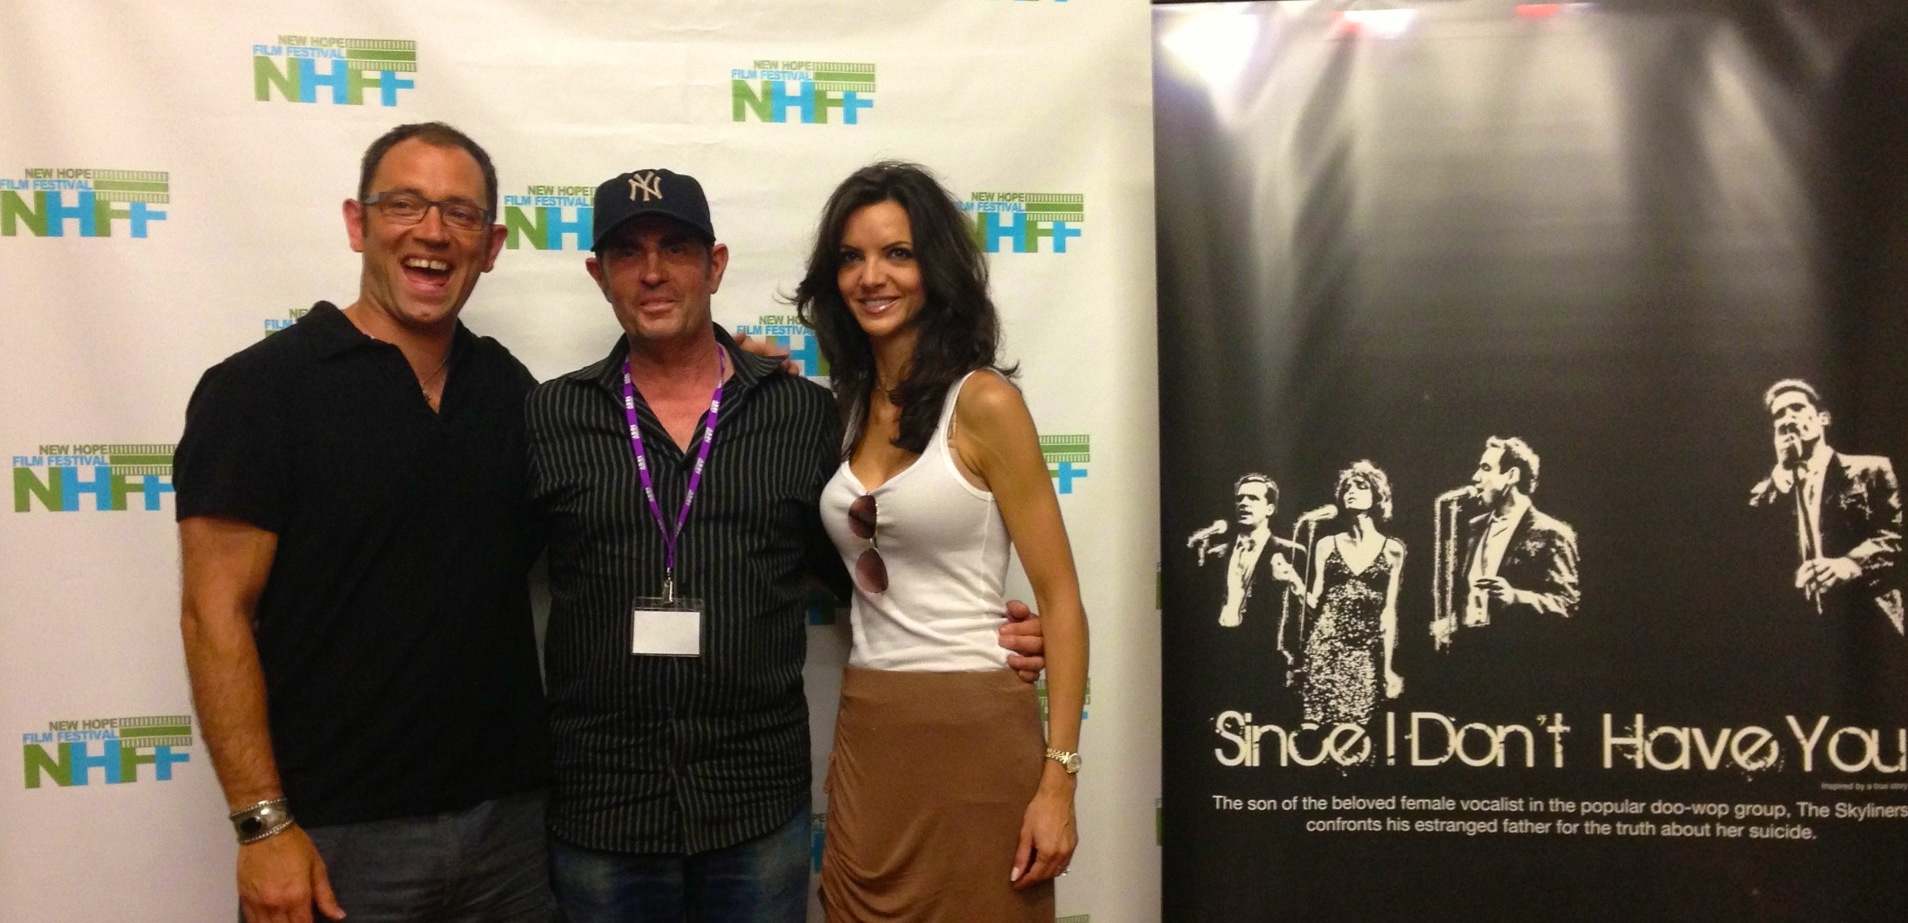 Kenny, Thom, Kristin at New Hope Film Festival 2013